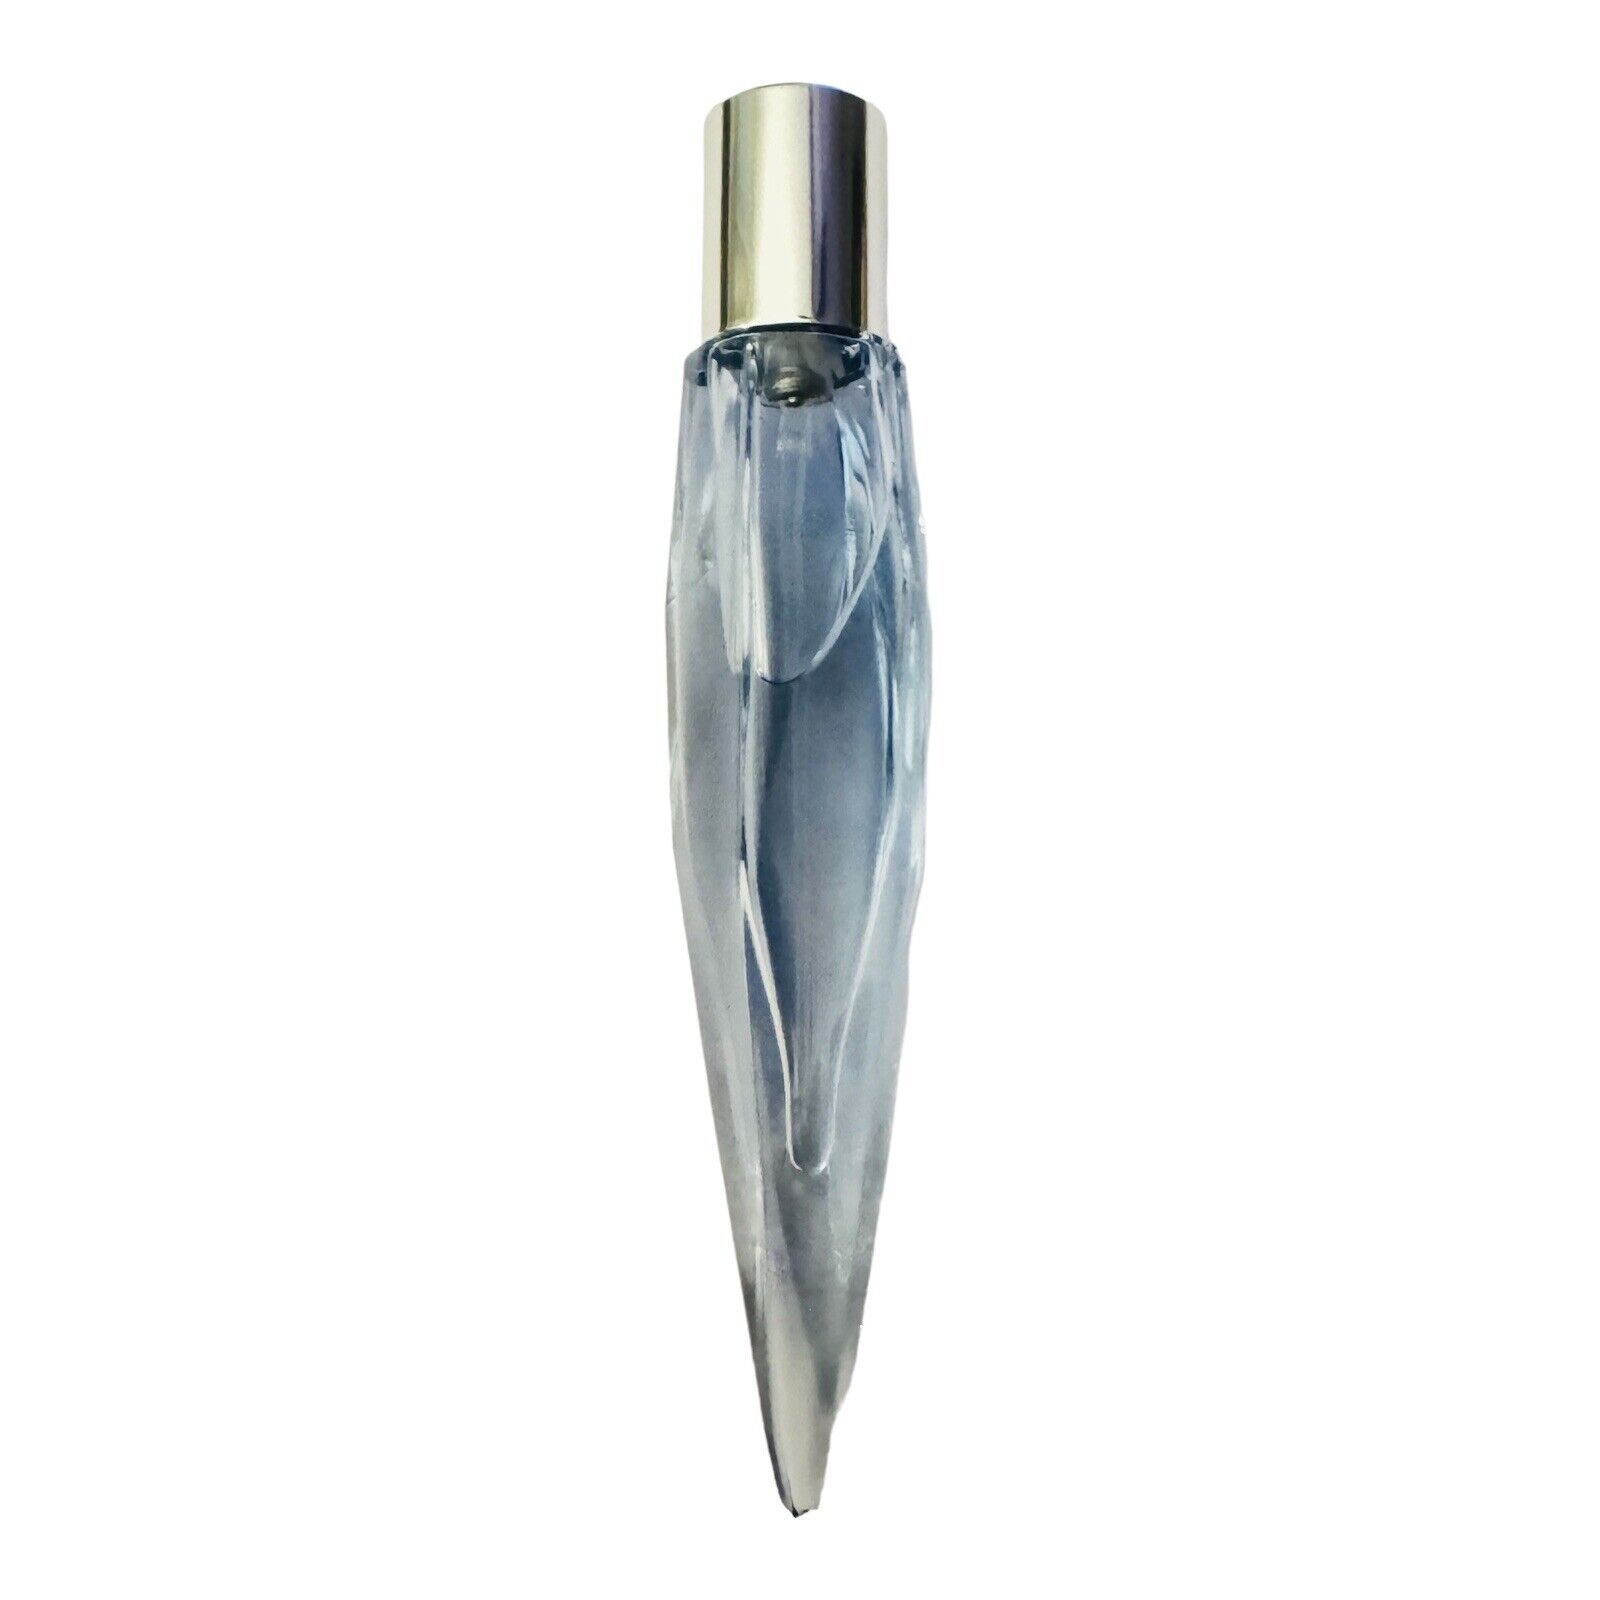 Thierry Mugler Angel Eau de parfum sprah 0.3 fl oz/ 10 ml As pictured .